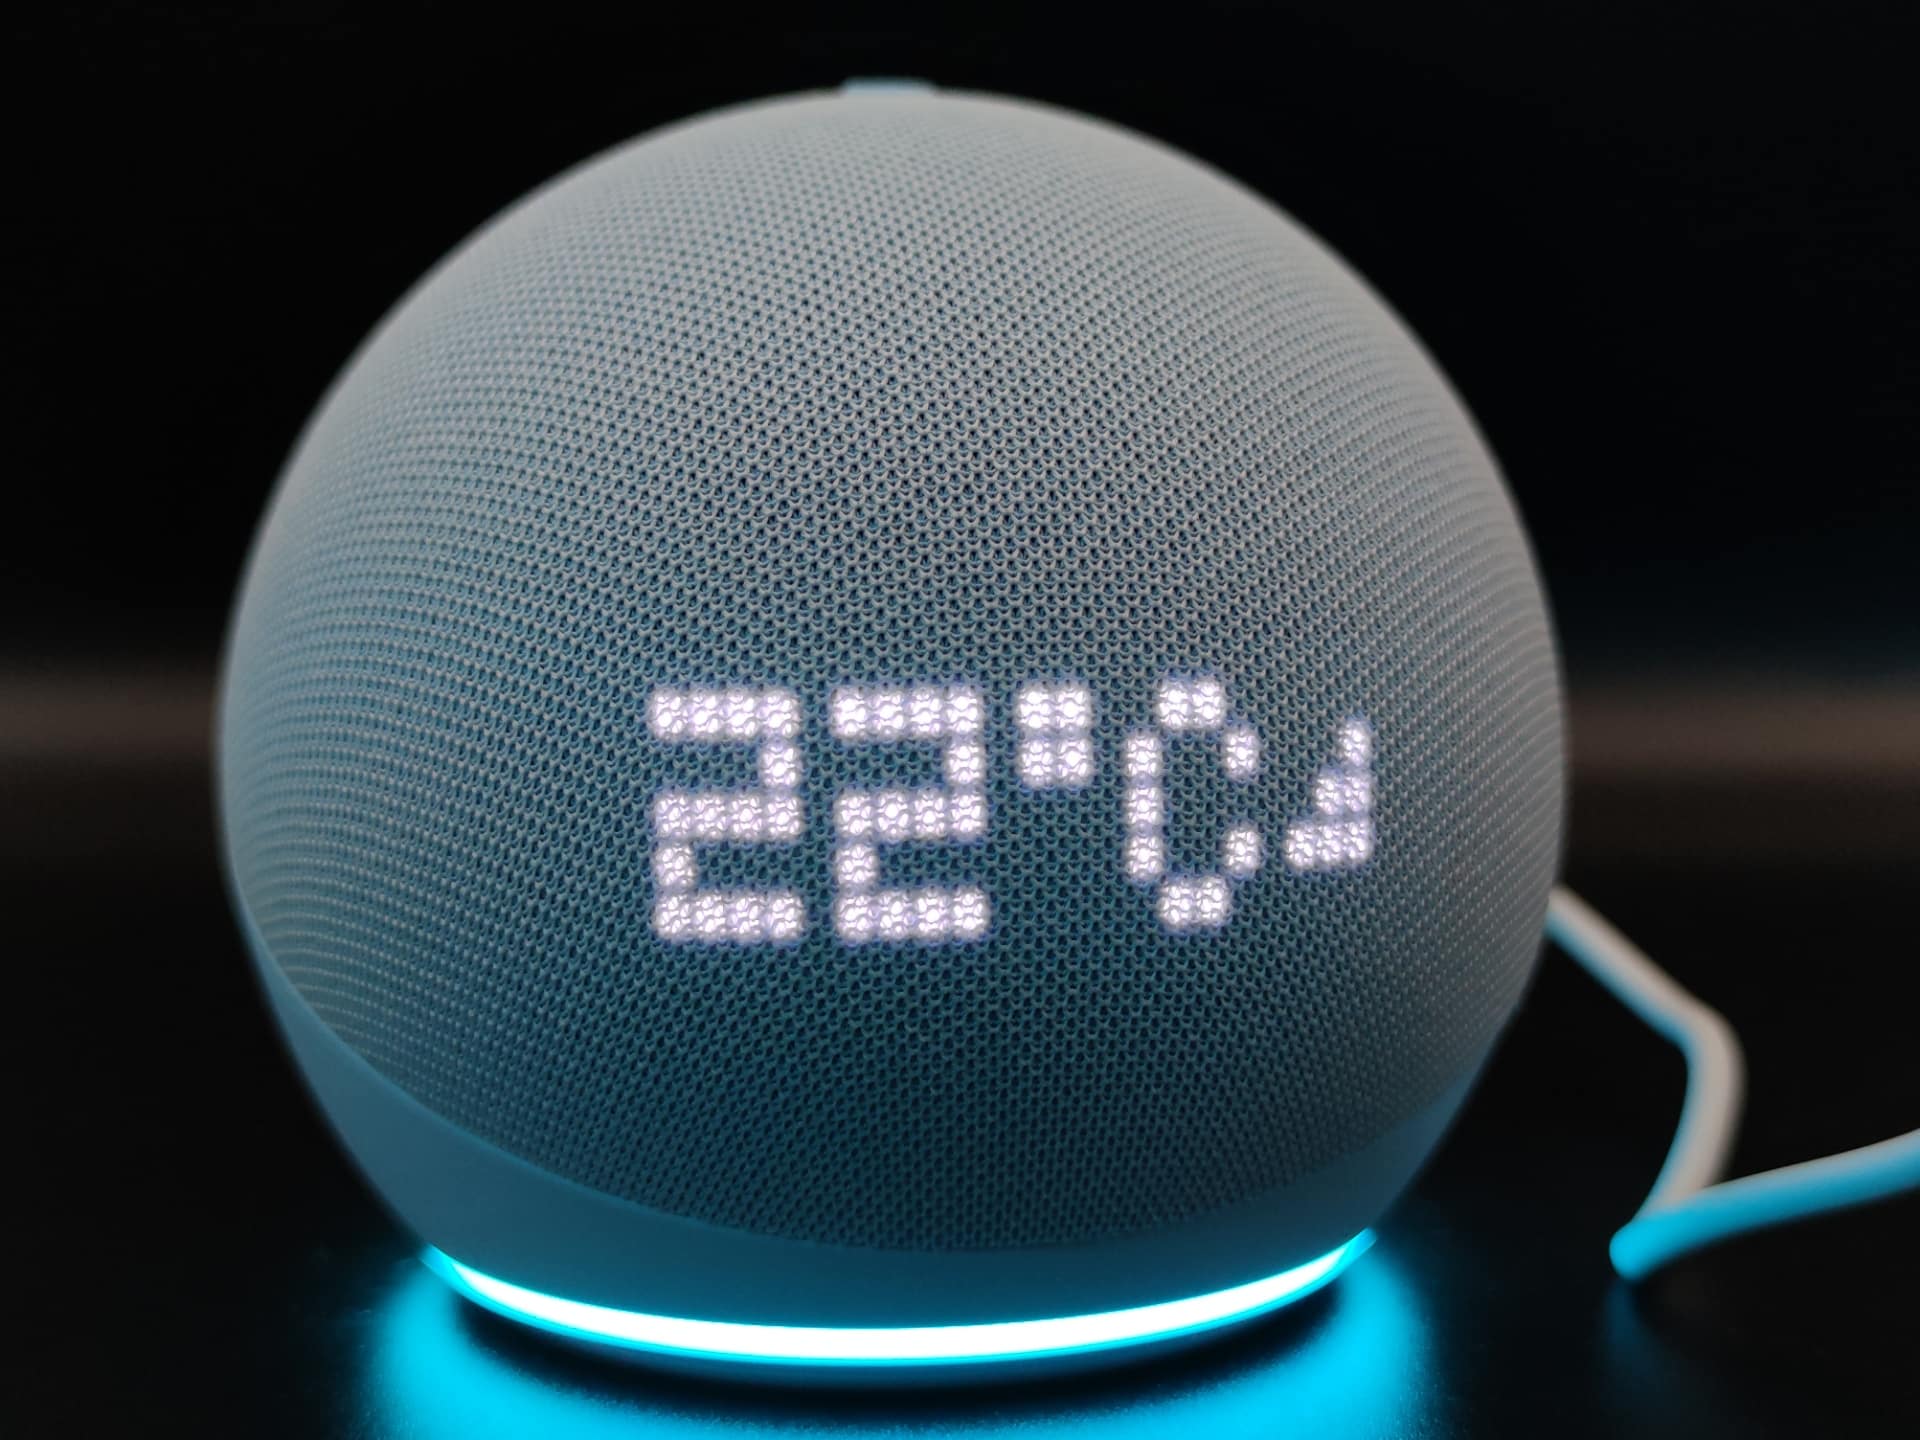 Enceinte connectée Echo Dot 5e génération. Bleu 